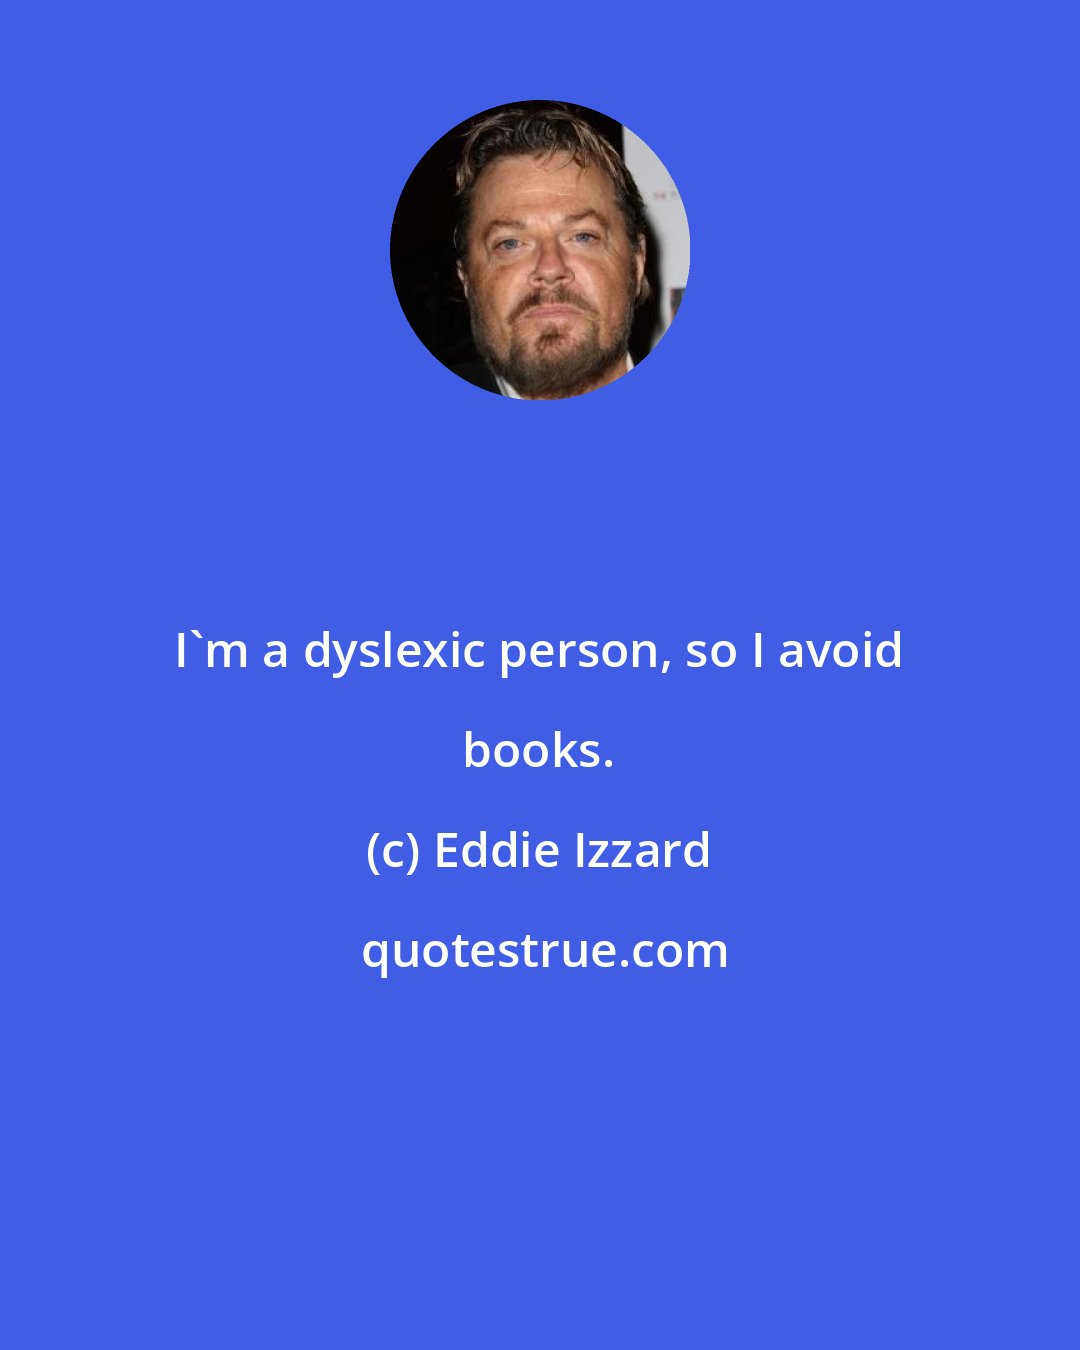 Eddie Izzard: I'm a dyslexic person, so I avoid books.